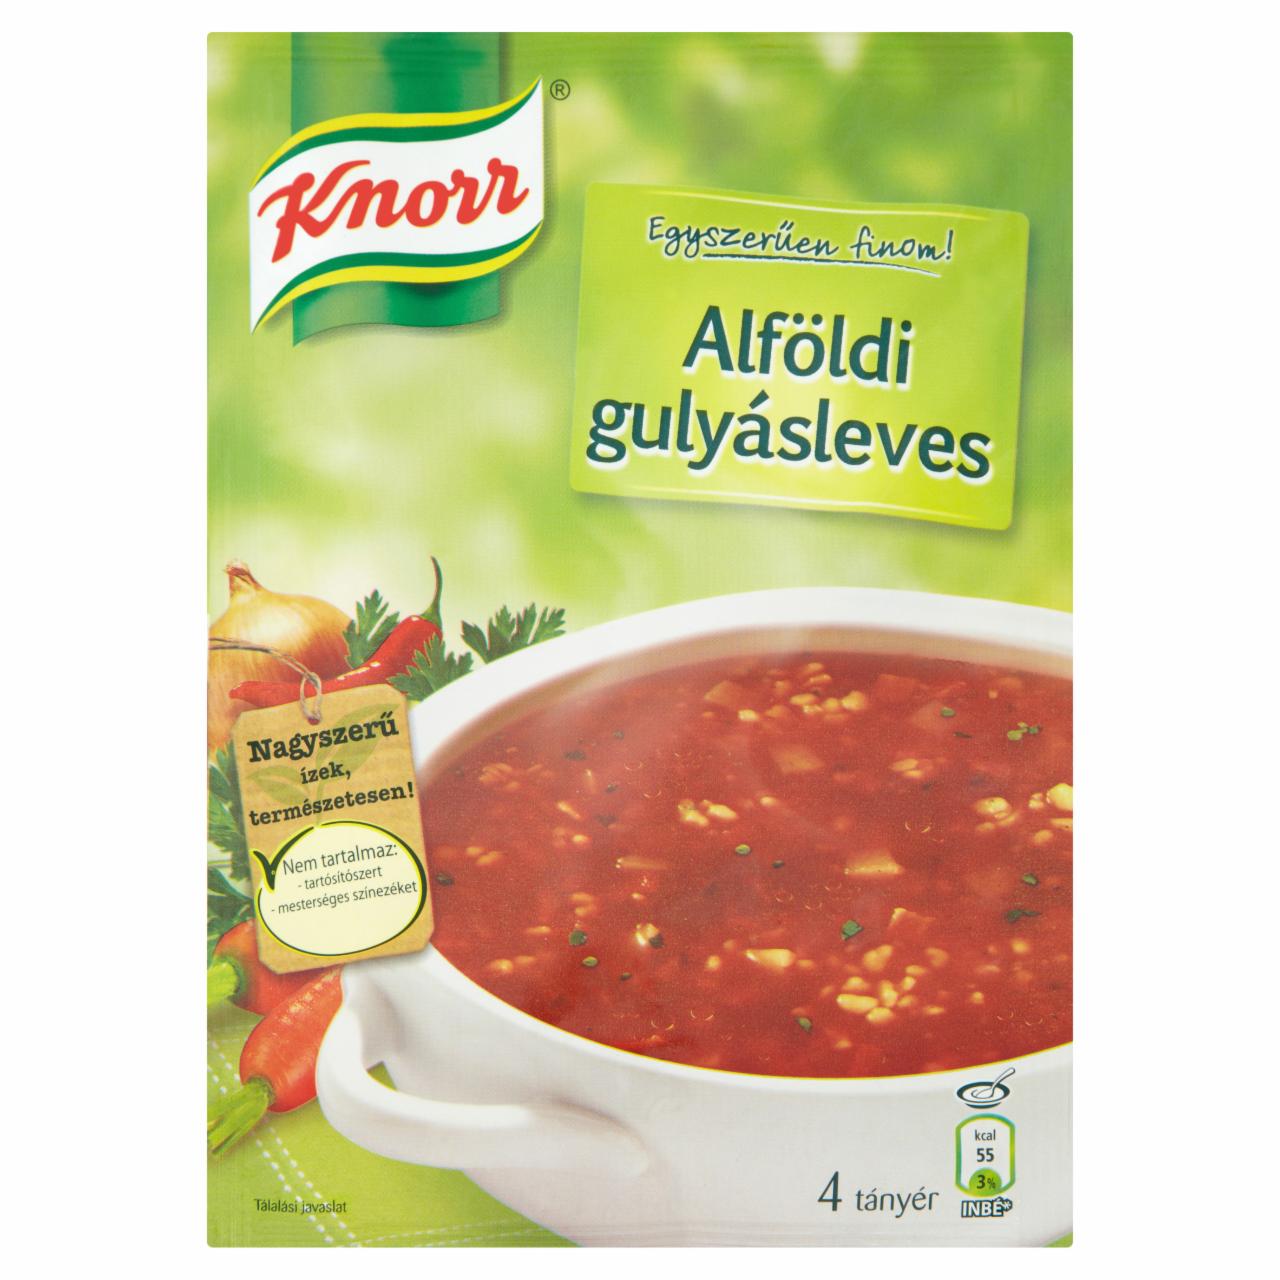 Képek - Knorr alföldi gulyásleves 65 g